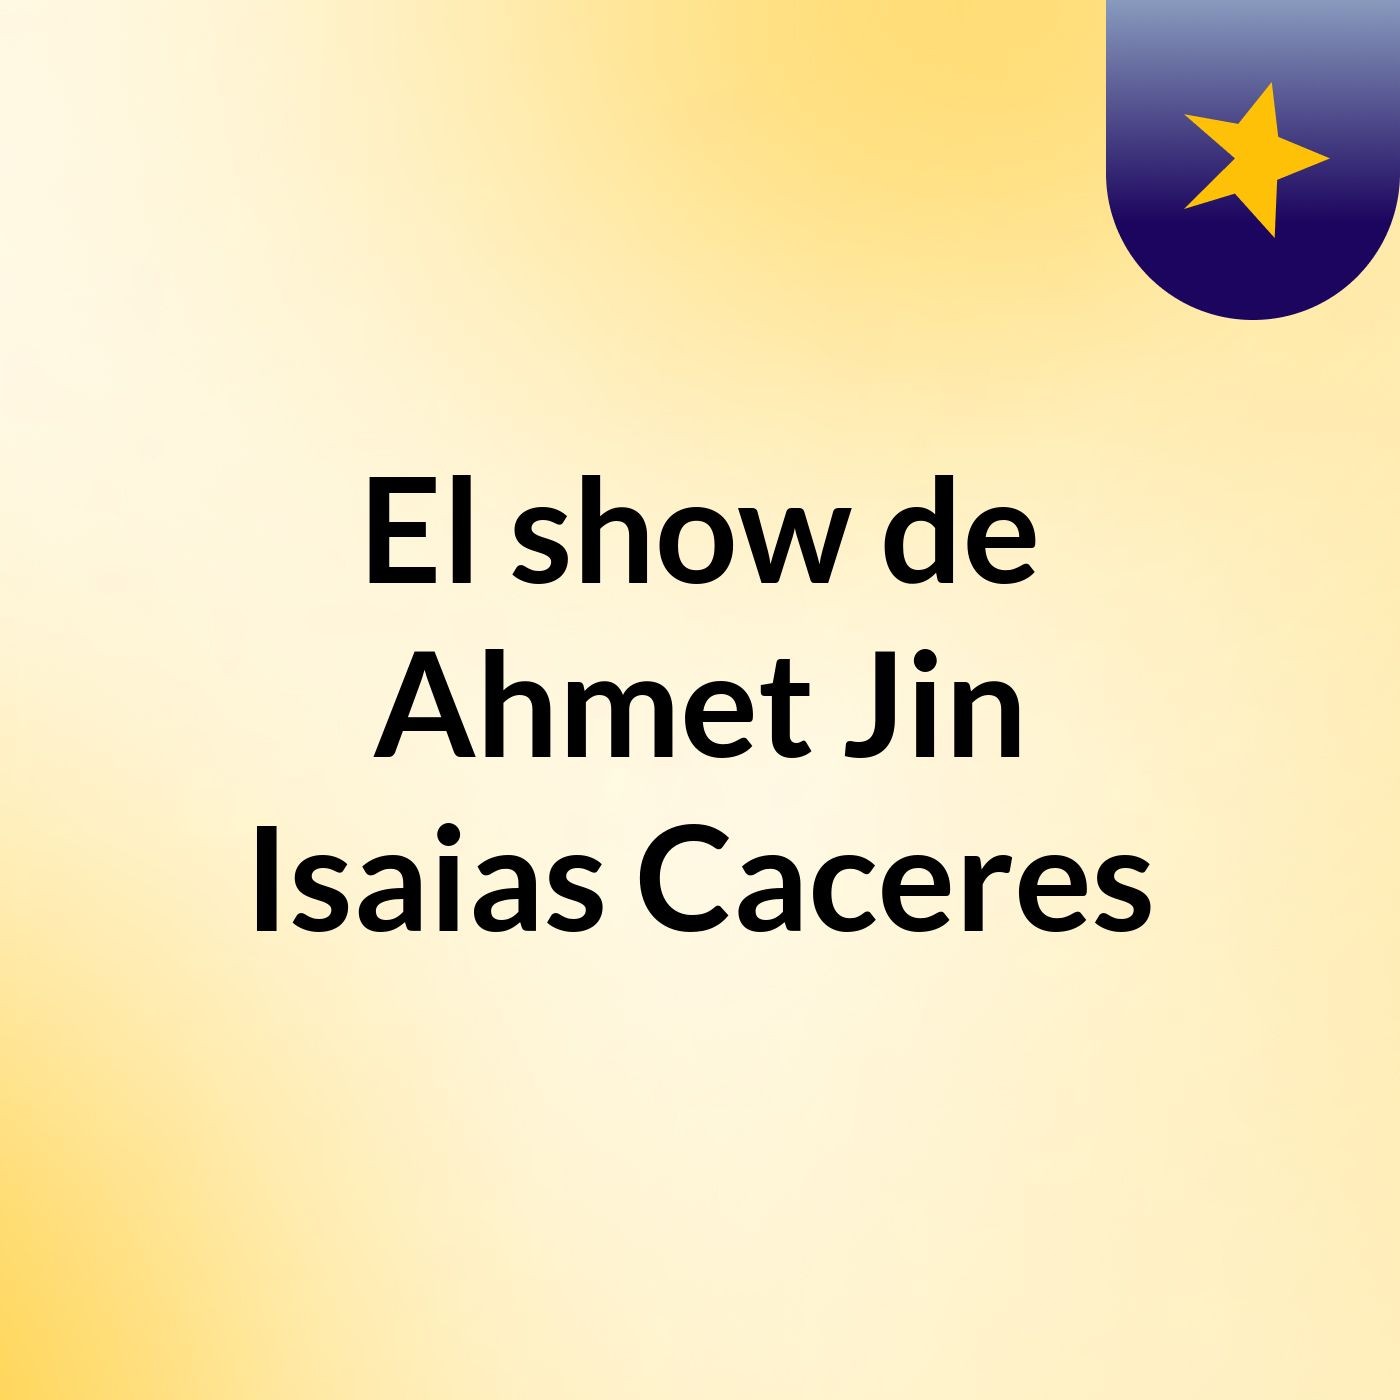 El show de Ahmet Jin Isaias Caceres